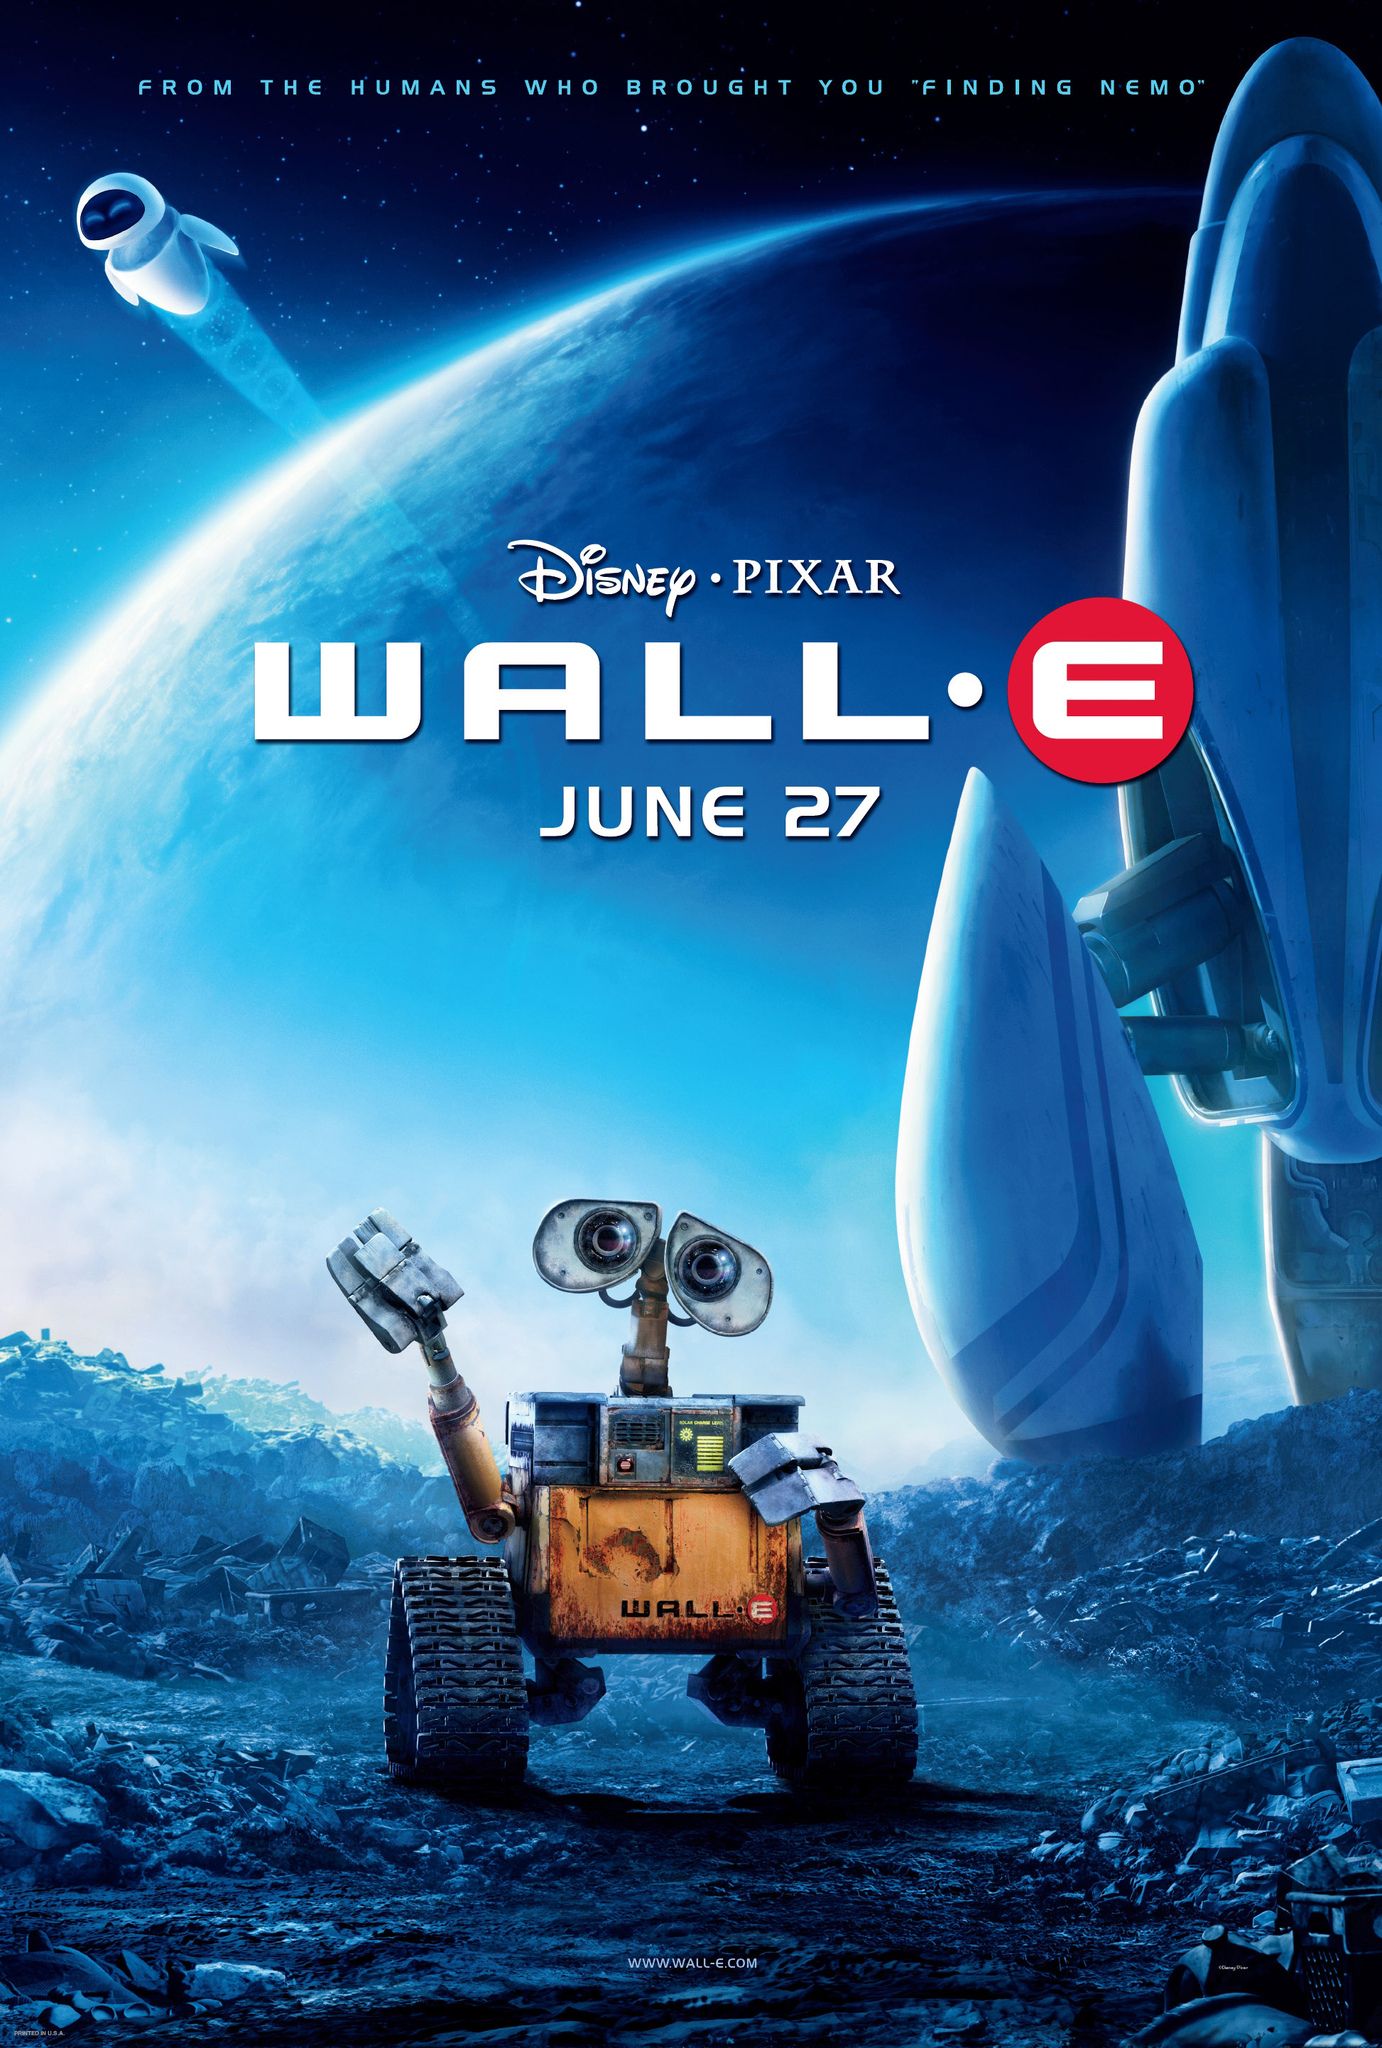 Disney's Wall-E poster